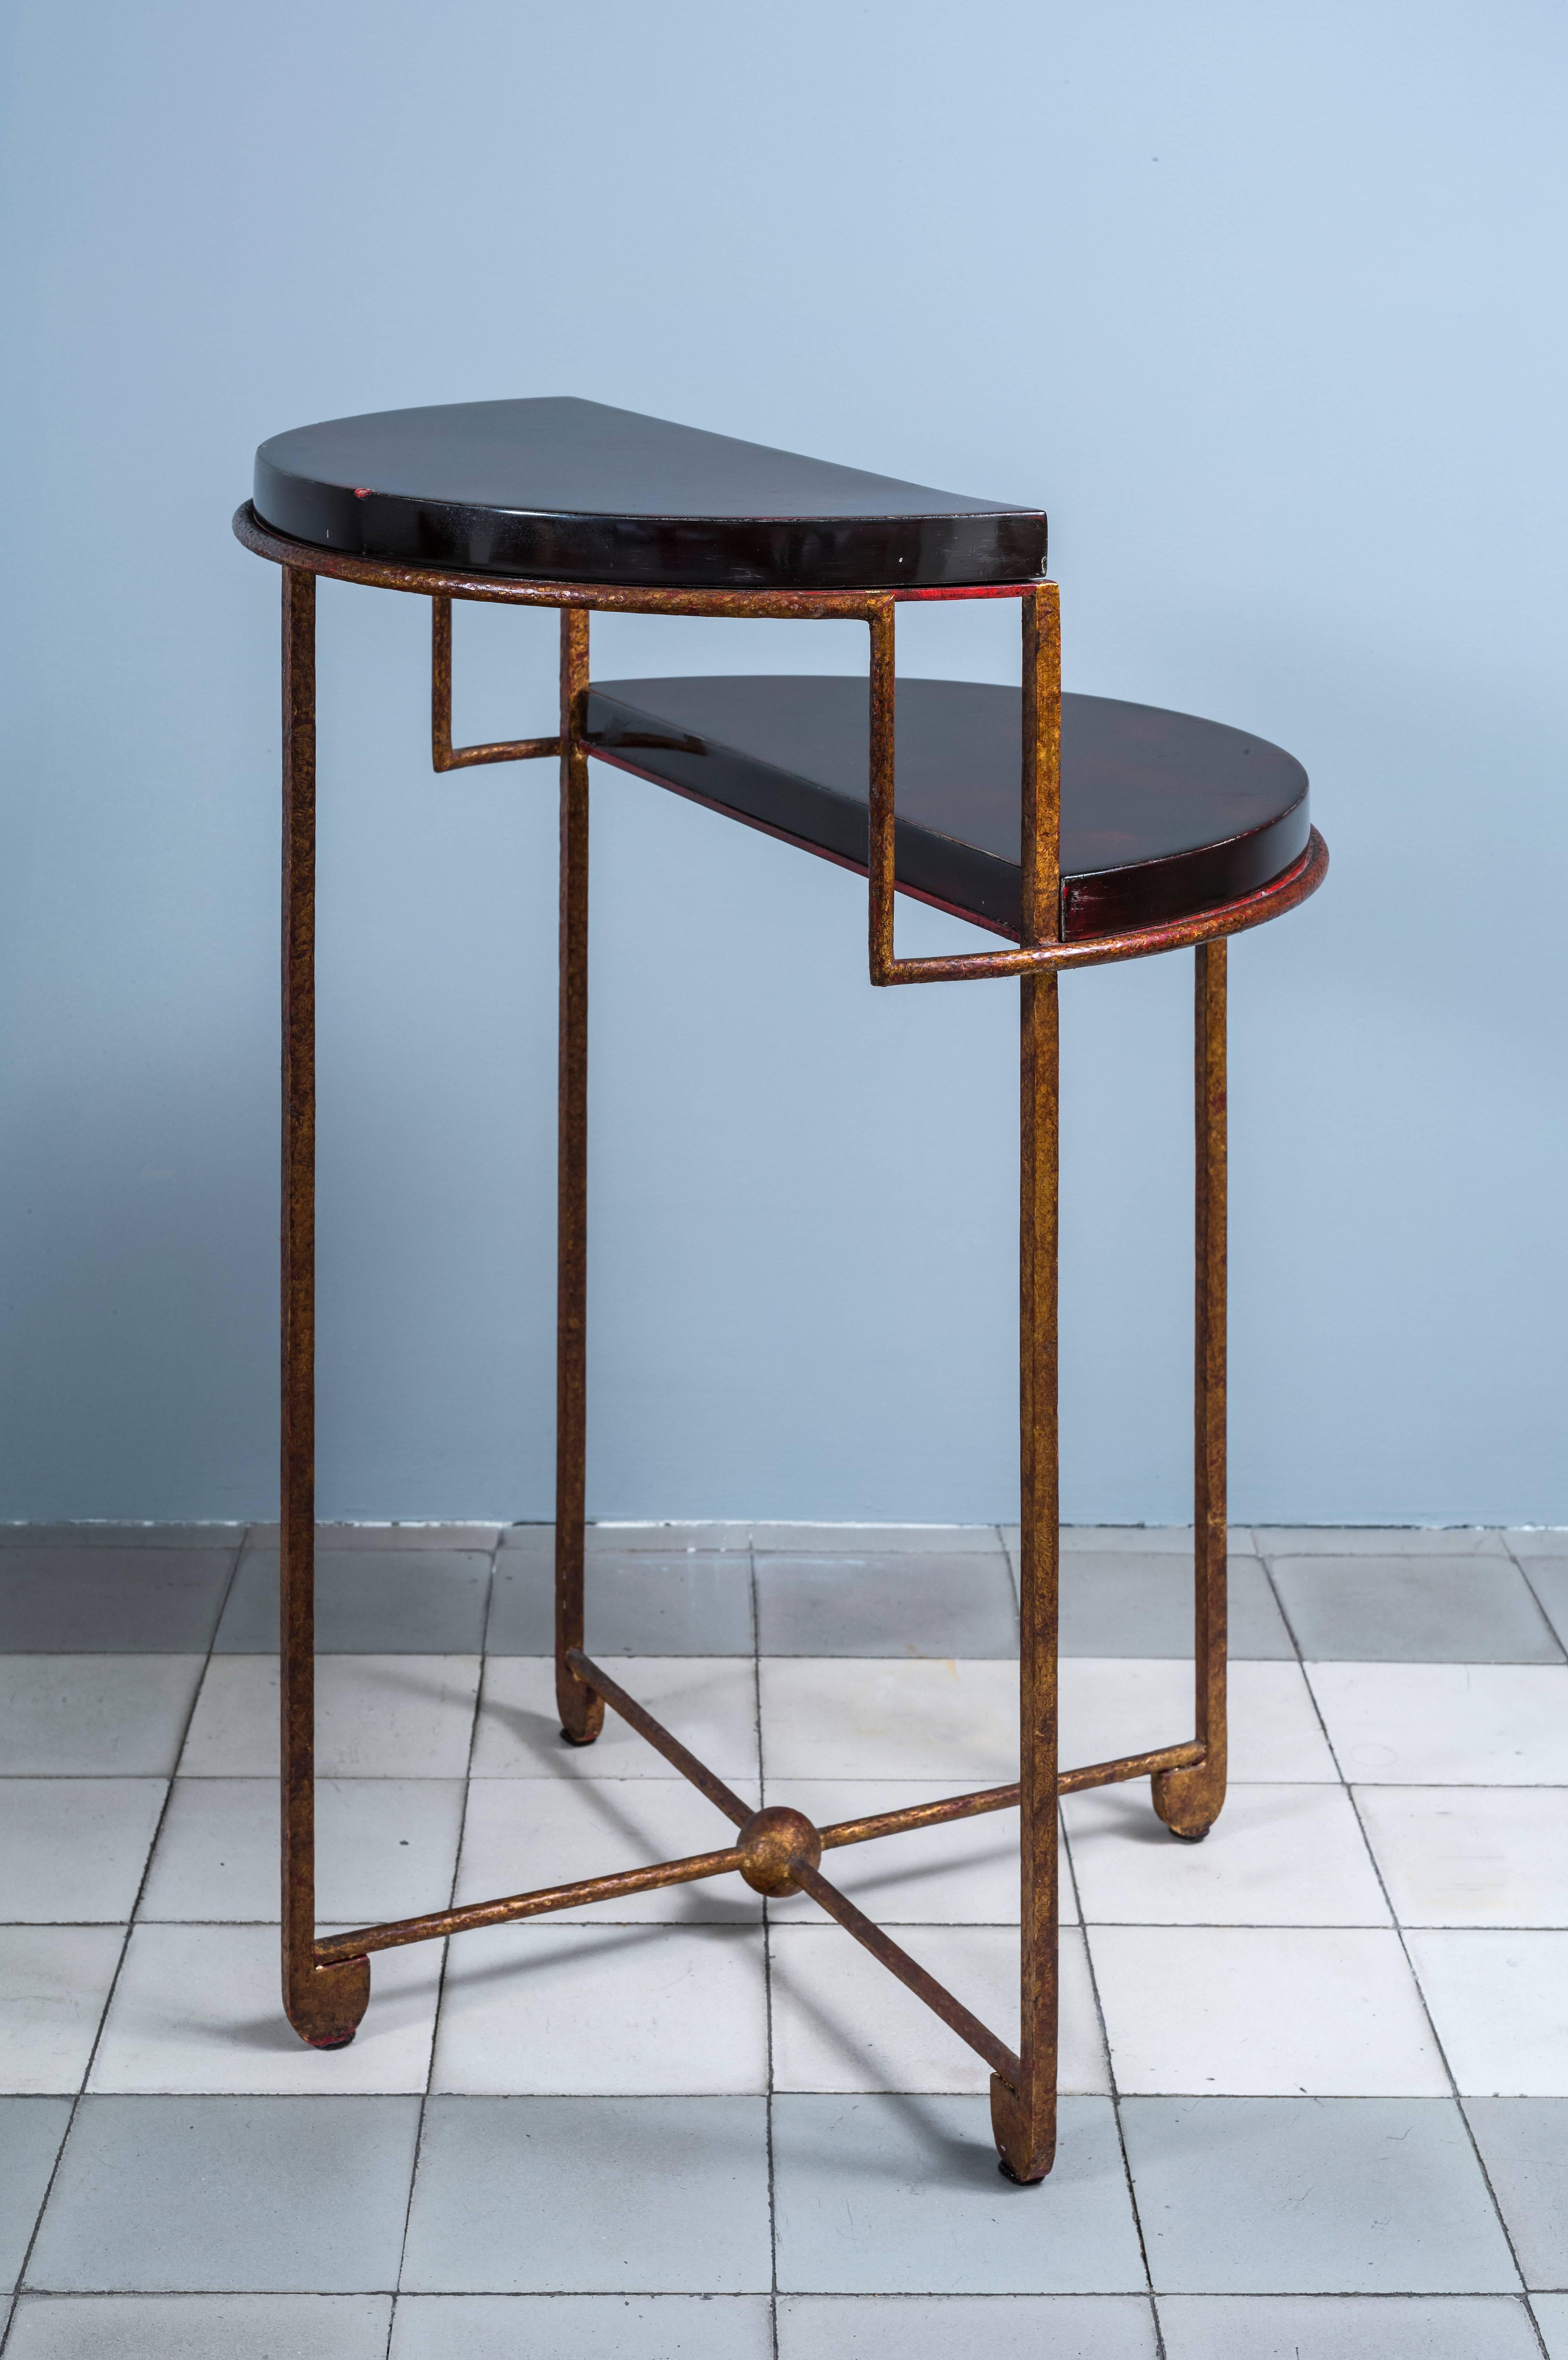 French Leon Jallot, Pedestal Table 1927 Art Deco